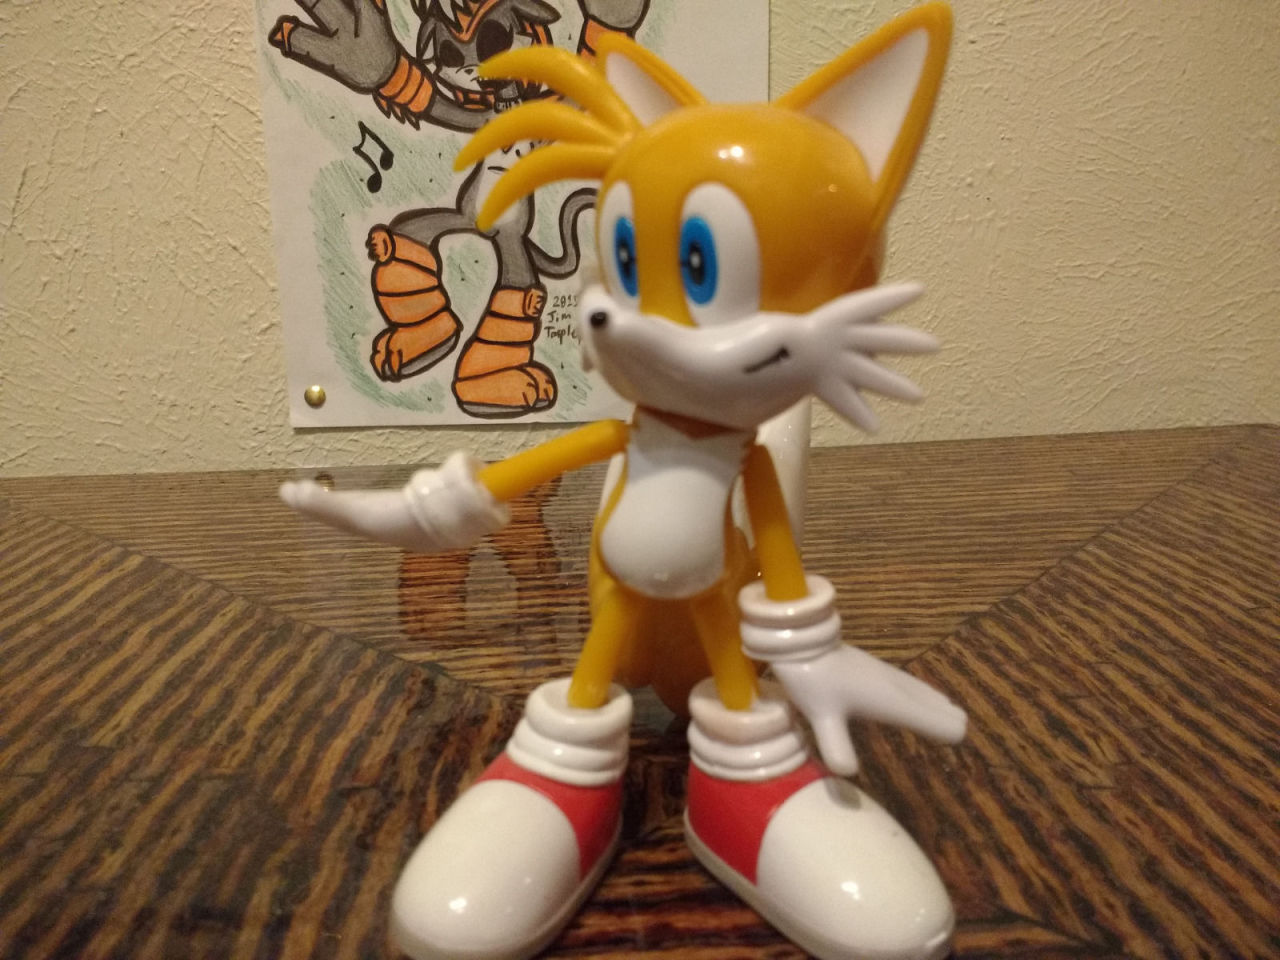 Sonic X Megabot Series 1 Sonic #1 5 Action Figure